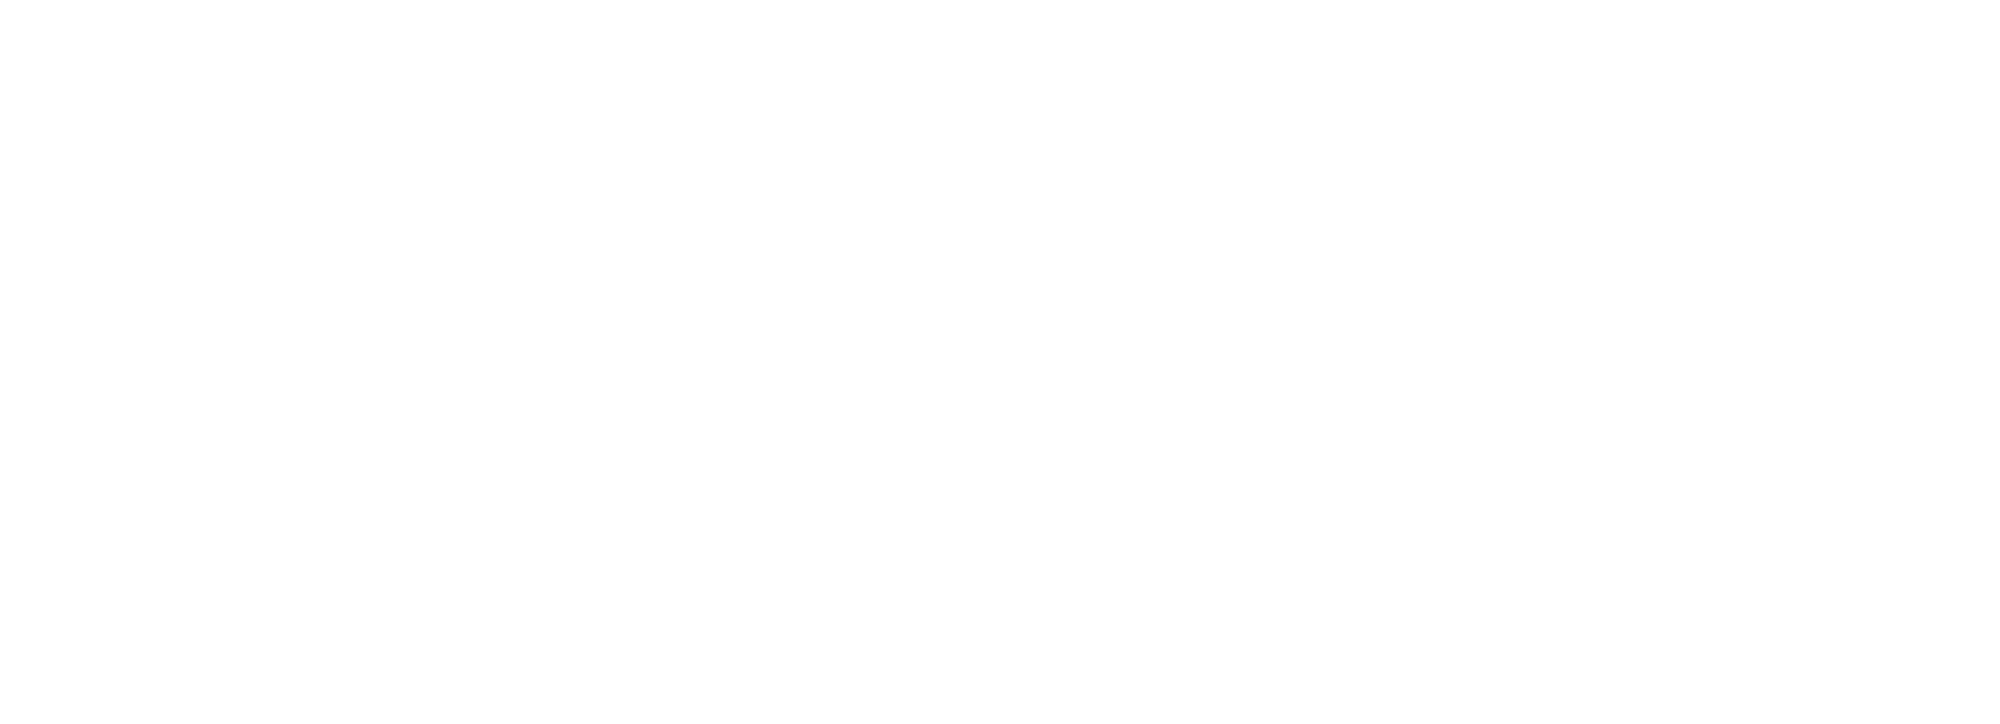 Sun-Pristine-Maids-logo.png